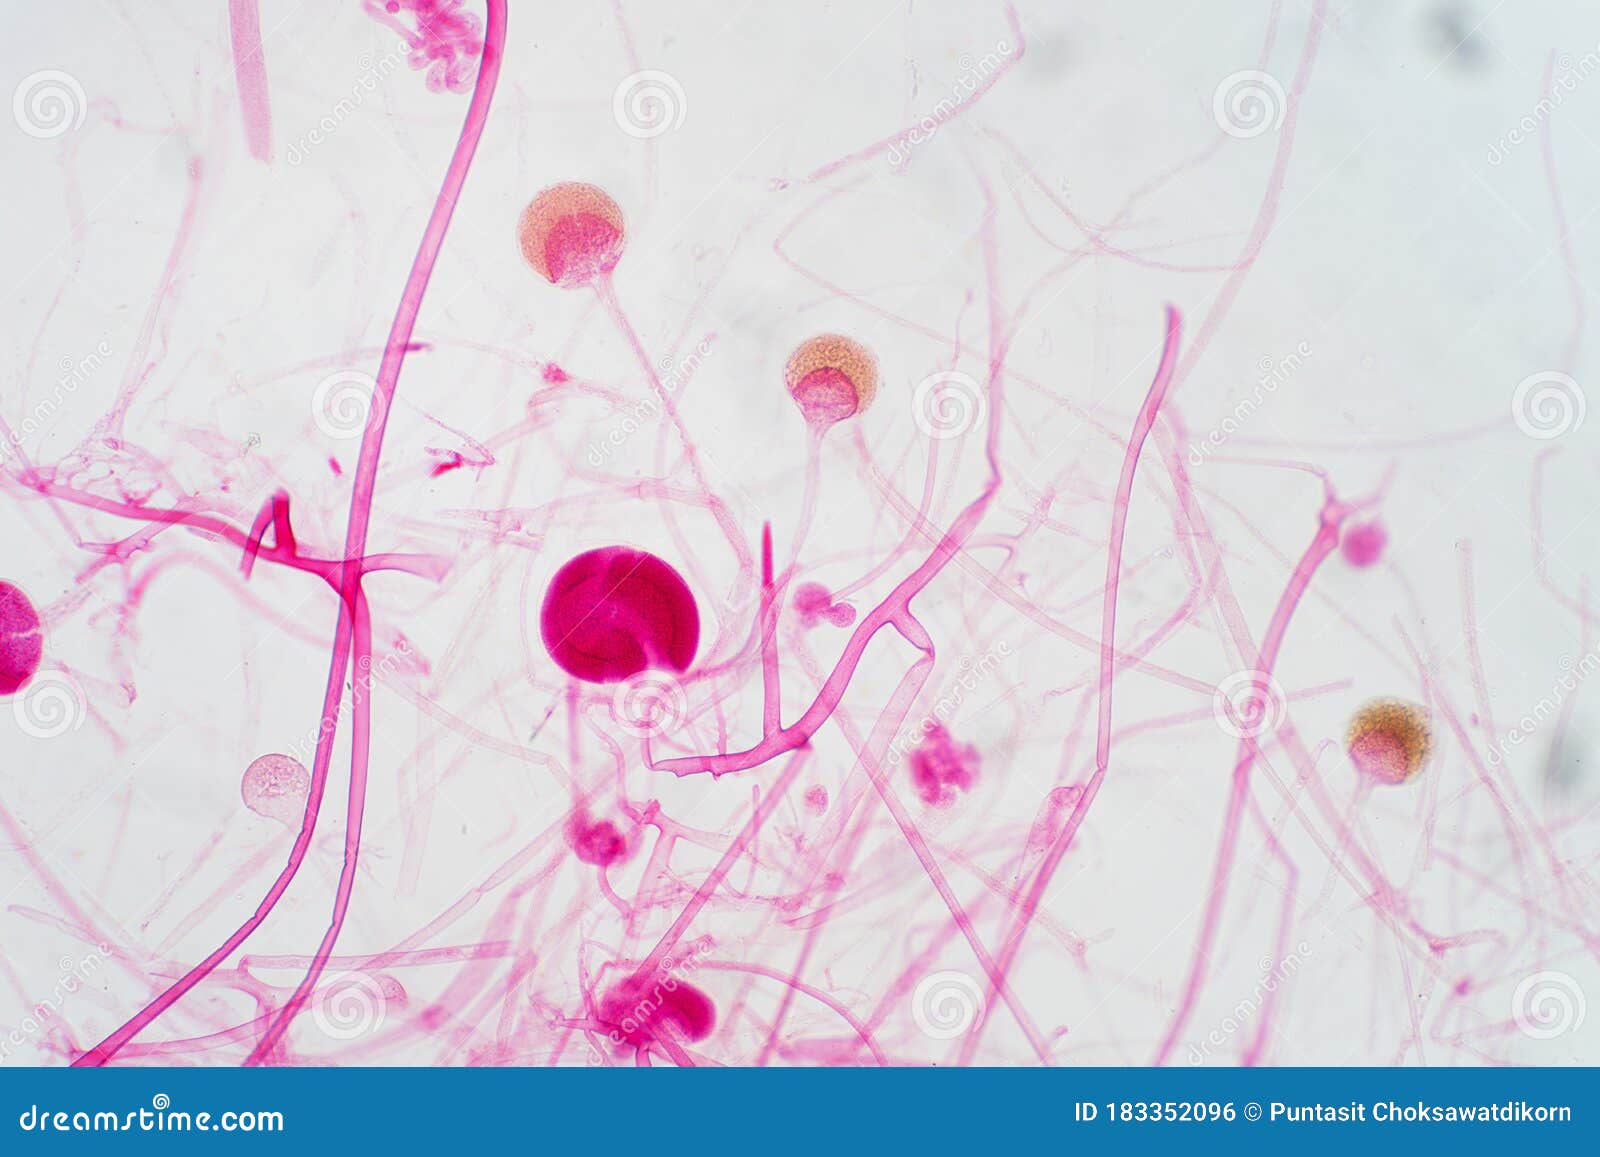 https://thumbs.dreamstime.com/z/rhizopus-bread-mold-under-microscope-genus-common-saprophytic-fungi-183352096.jpg